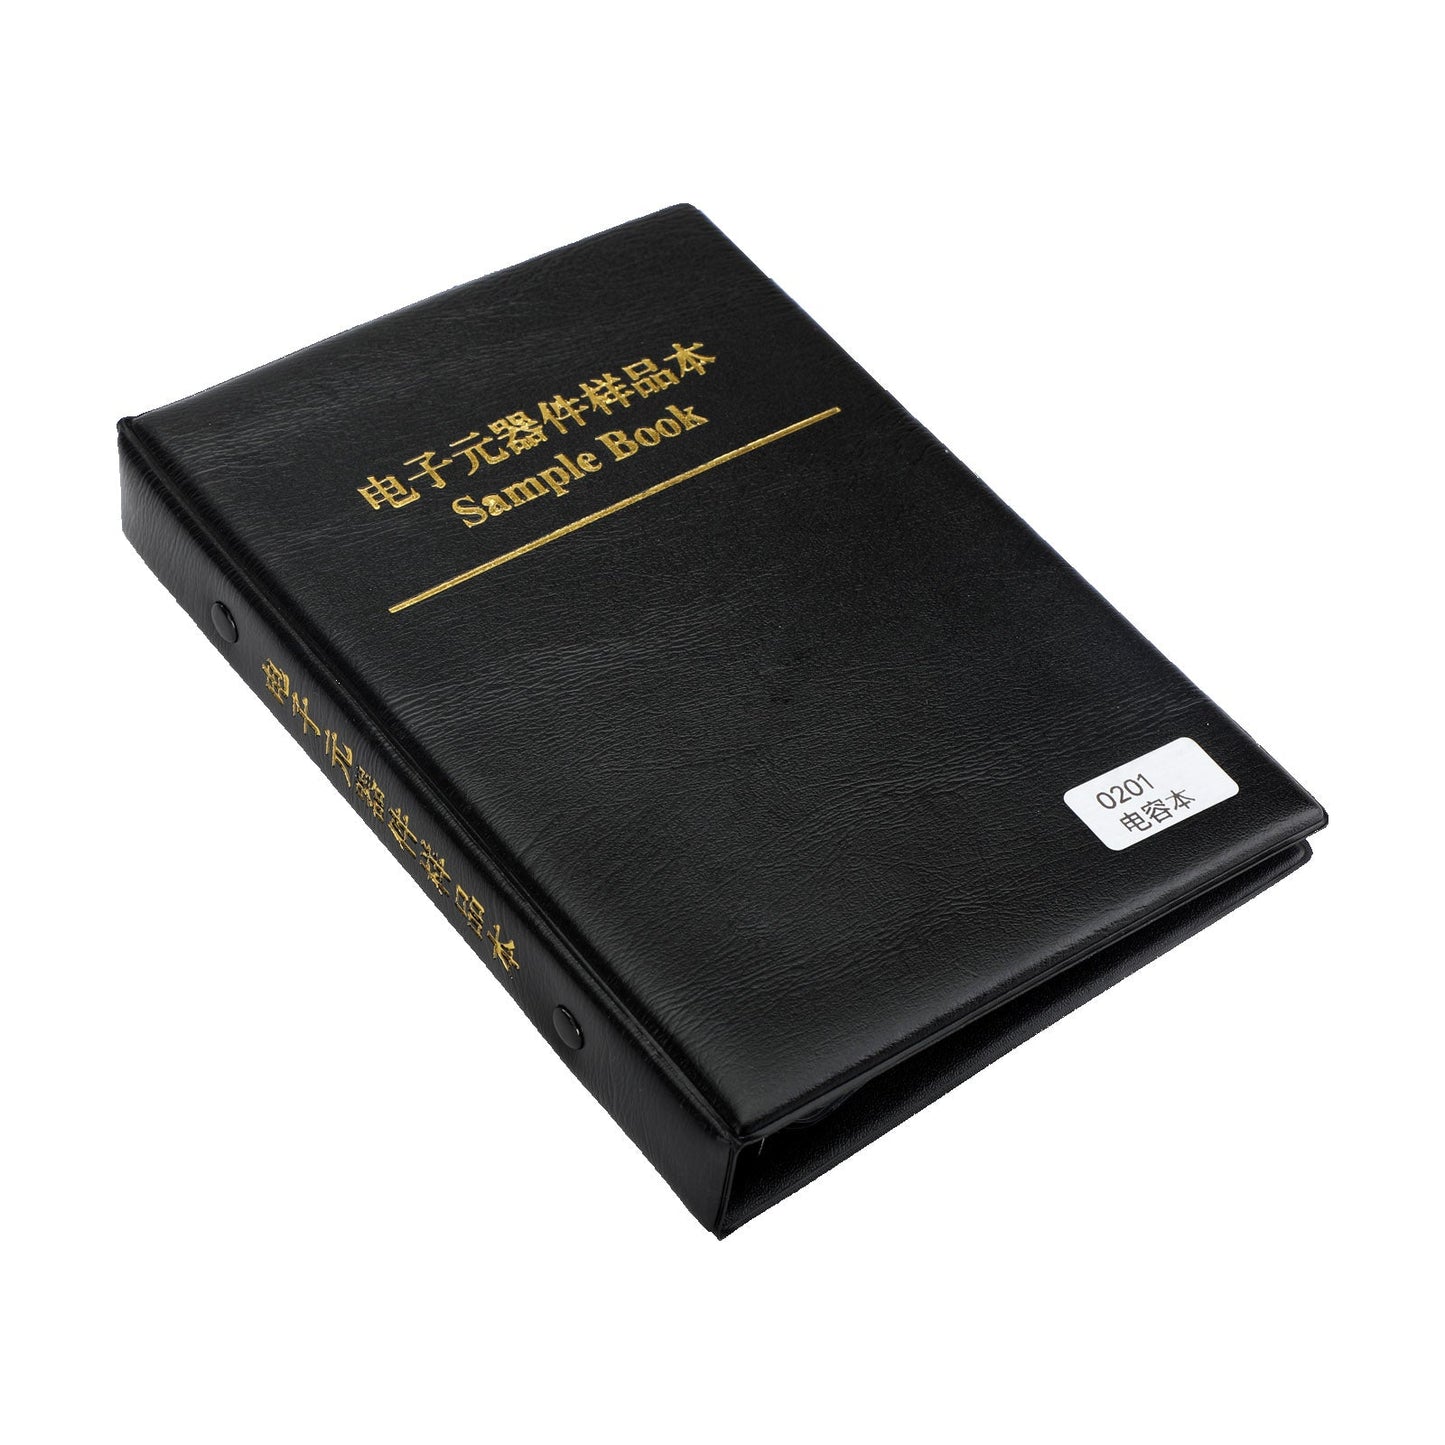 SMD0201 Capacitor sample book 51 values * 50pcs=2550pcs Capacitor kit SMD